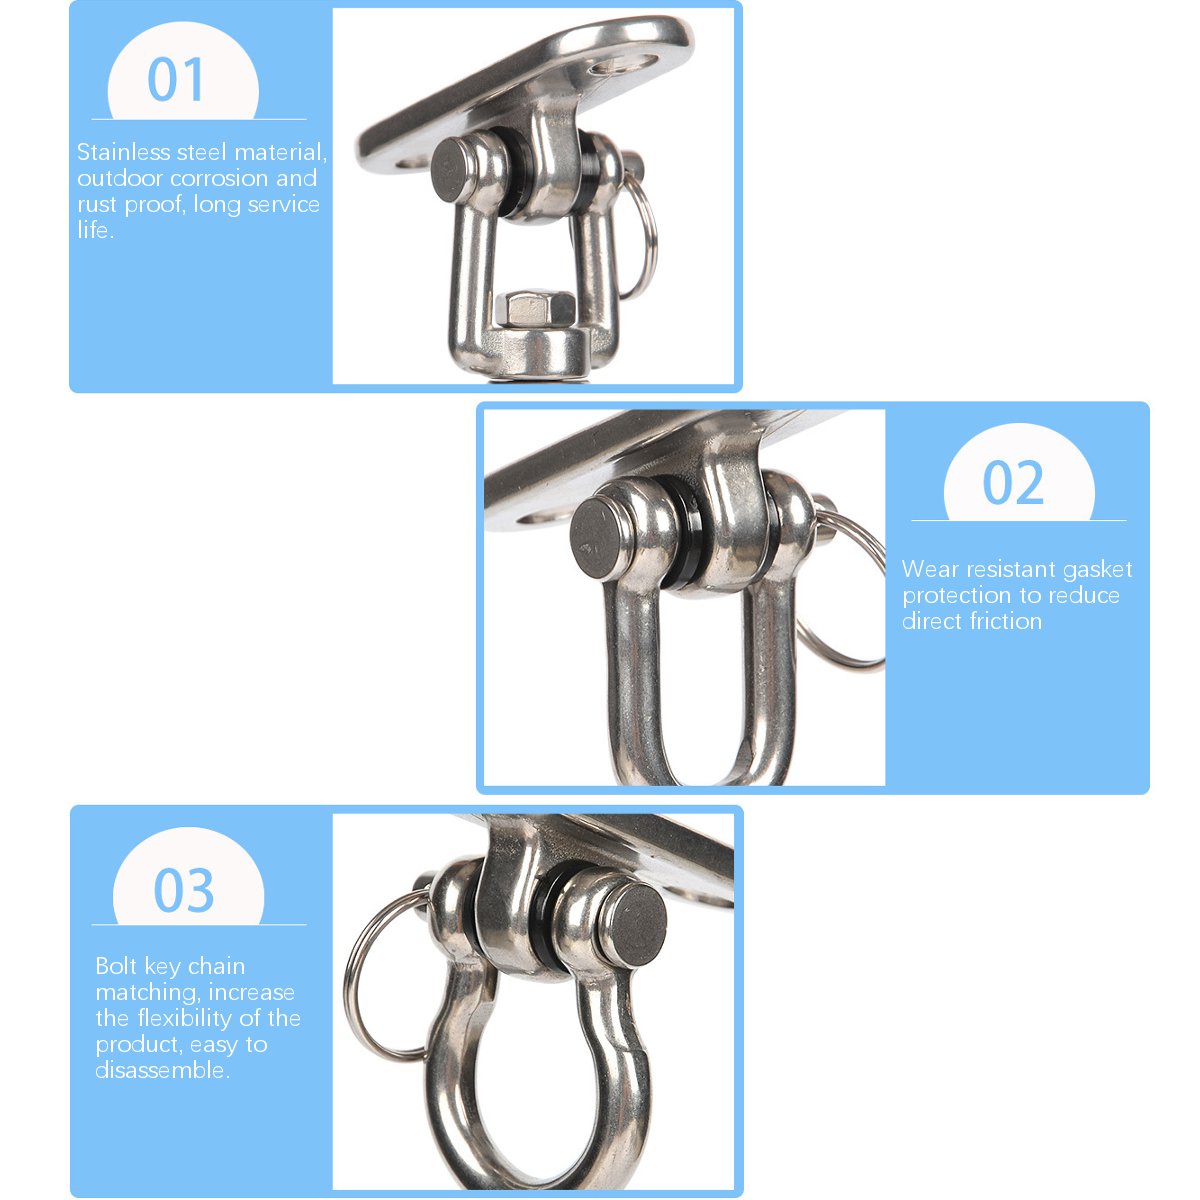 Stainless-Steel-Hammock-Hook-Swing-Accessories-Hanging-Expansion-Screws-Kits-1709368